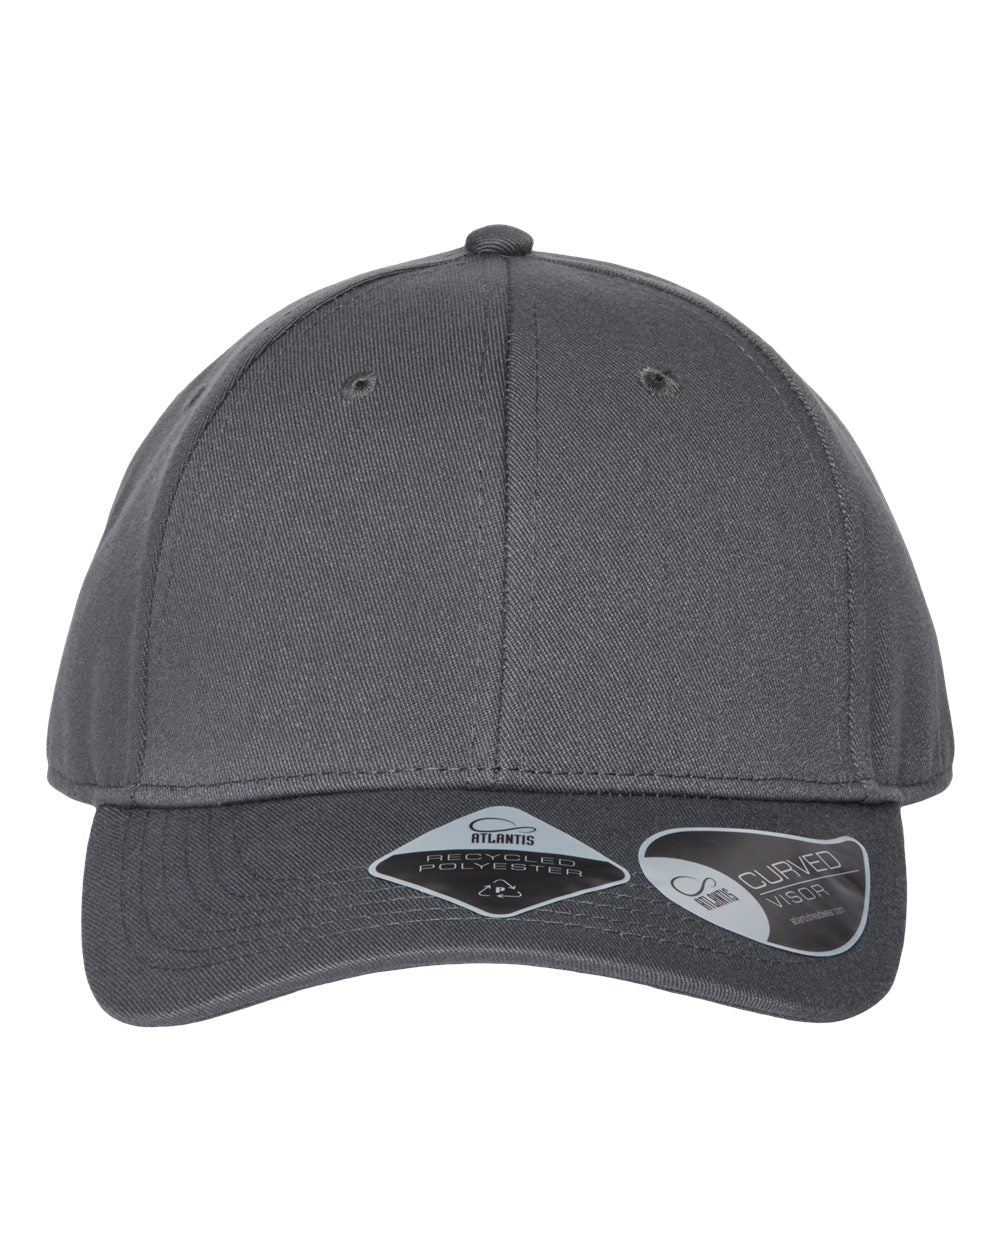 Customizable Atlantis Headwear Structured Joshua Hat in gray.